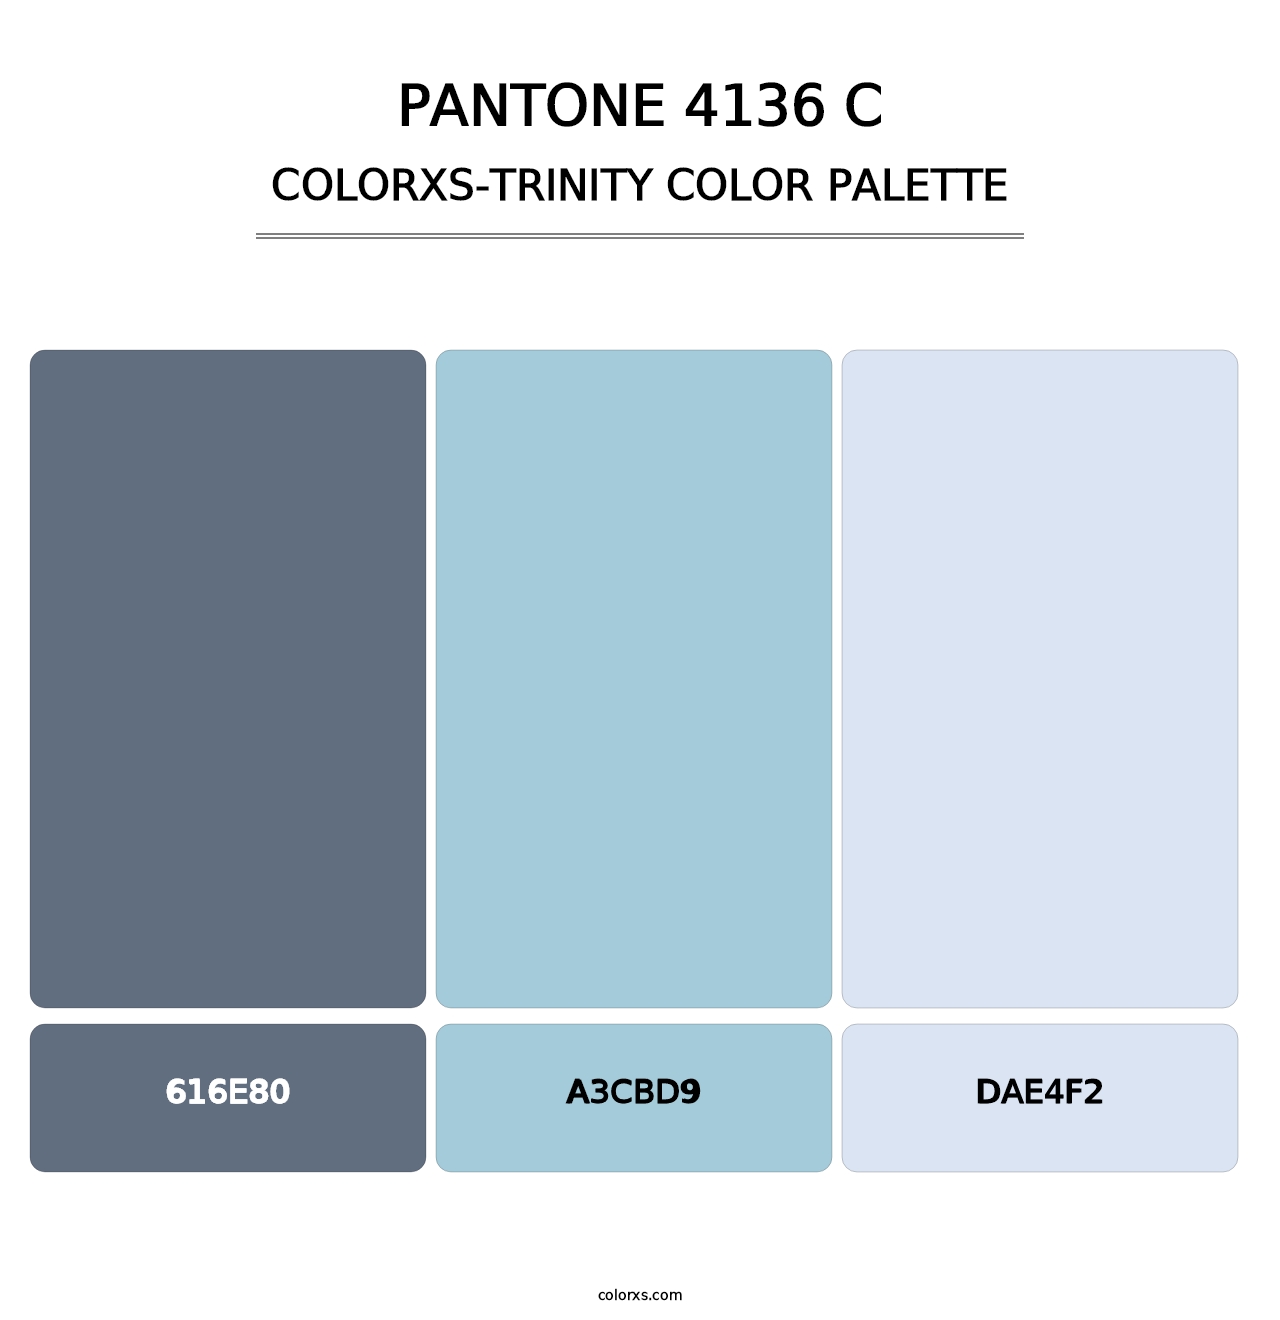 PANTONE 4136 C - Colorxs Trinity Palette